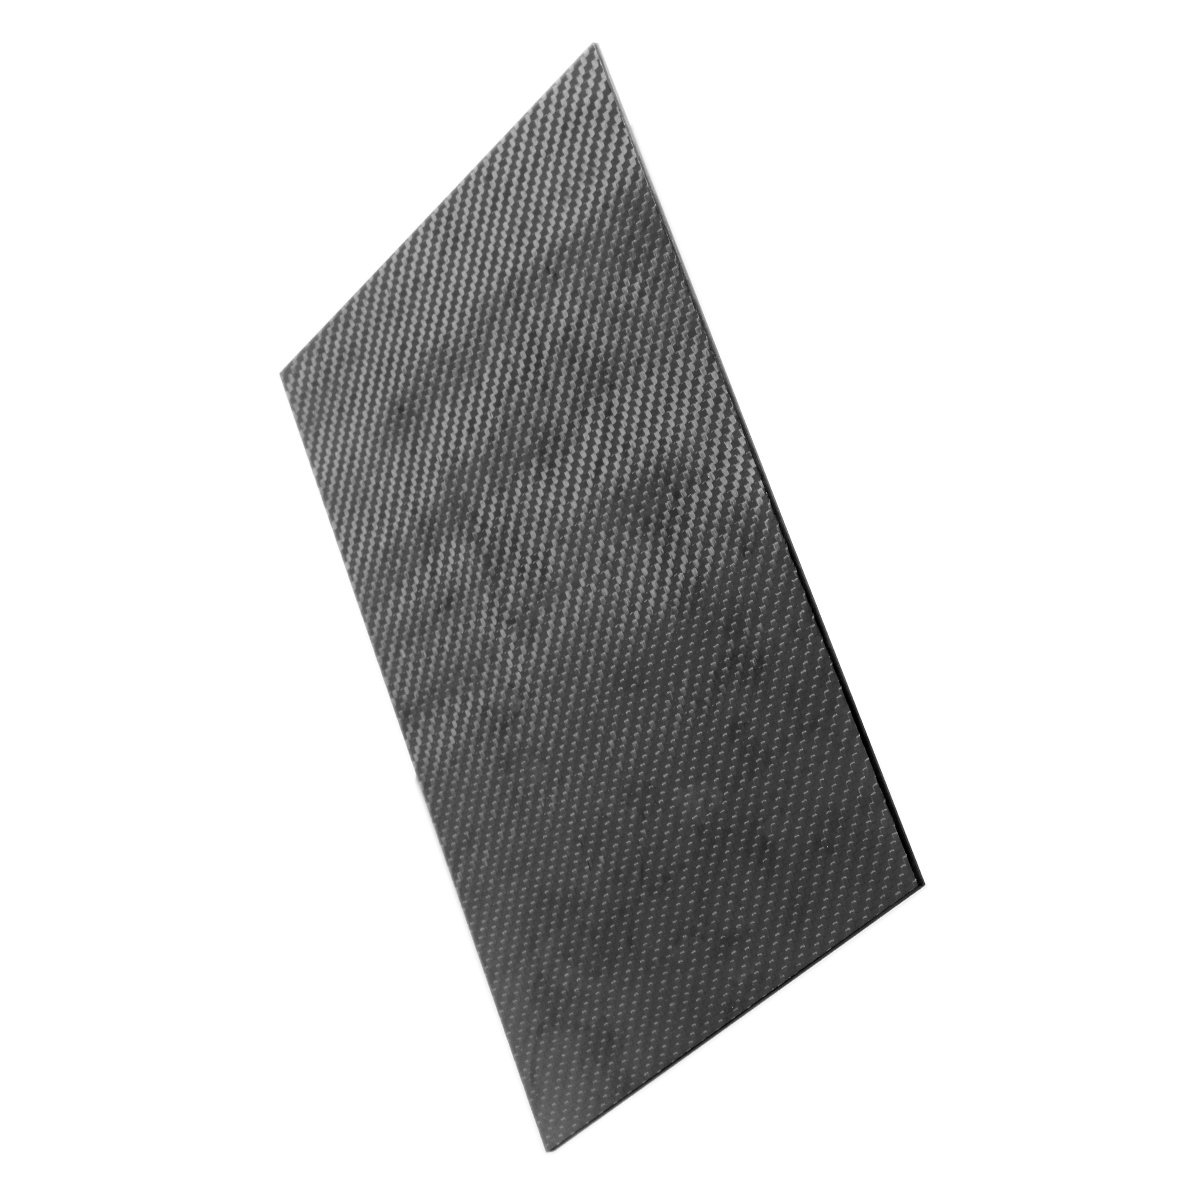 400x500x05-5mm-3K-Black-Twill-Weave-Carbon-Fiber-Plate-Sheet-Glossy-Carbon-Fiber-Board-Panel-High-Co-1483988-2